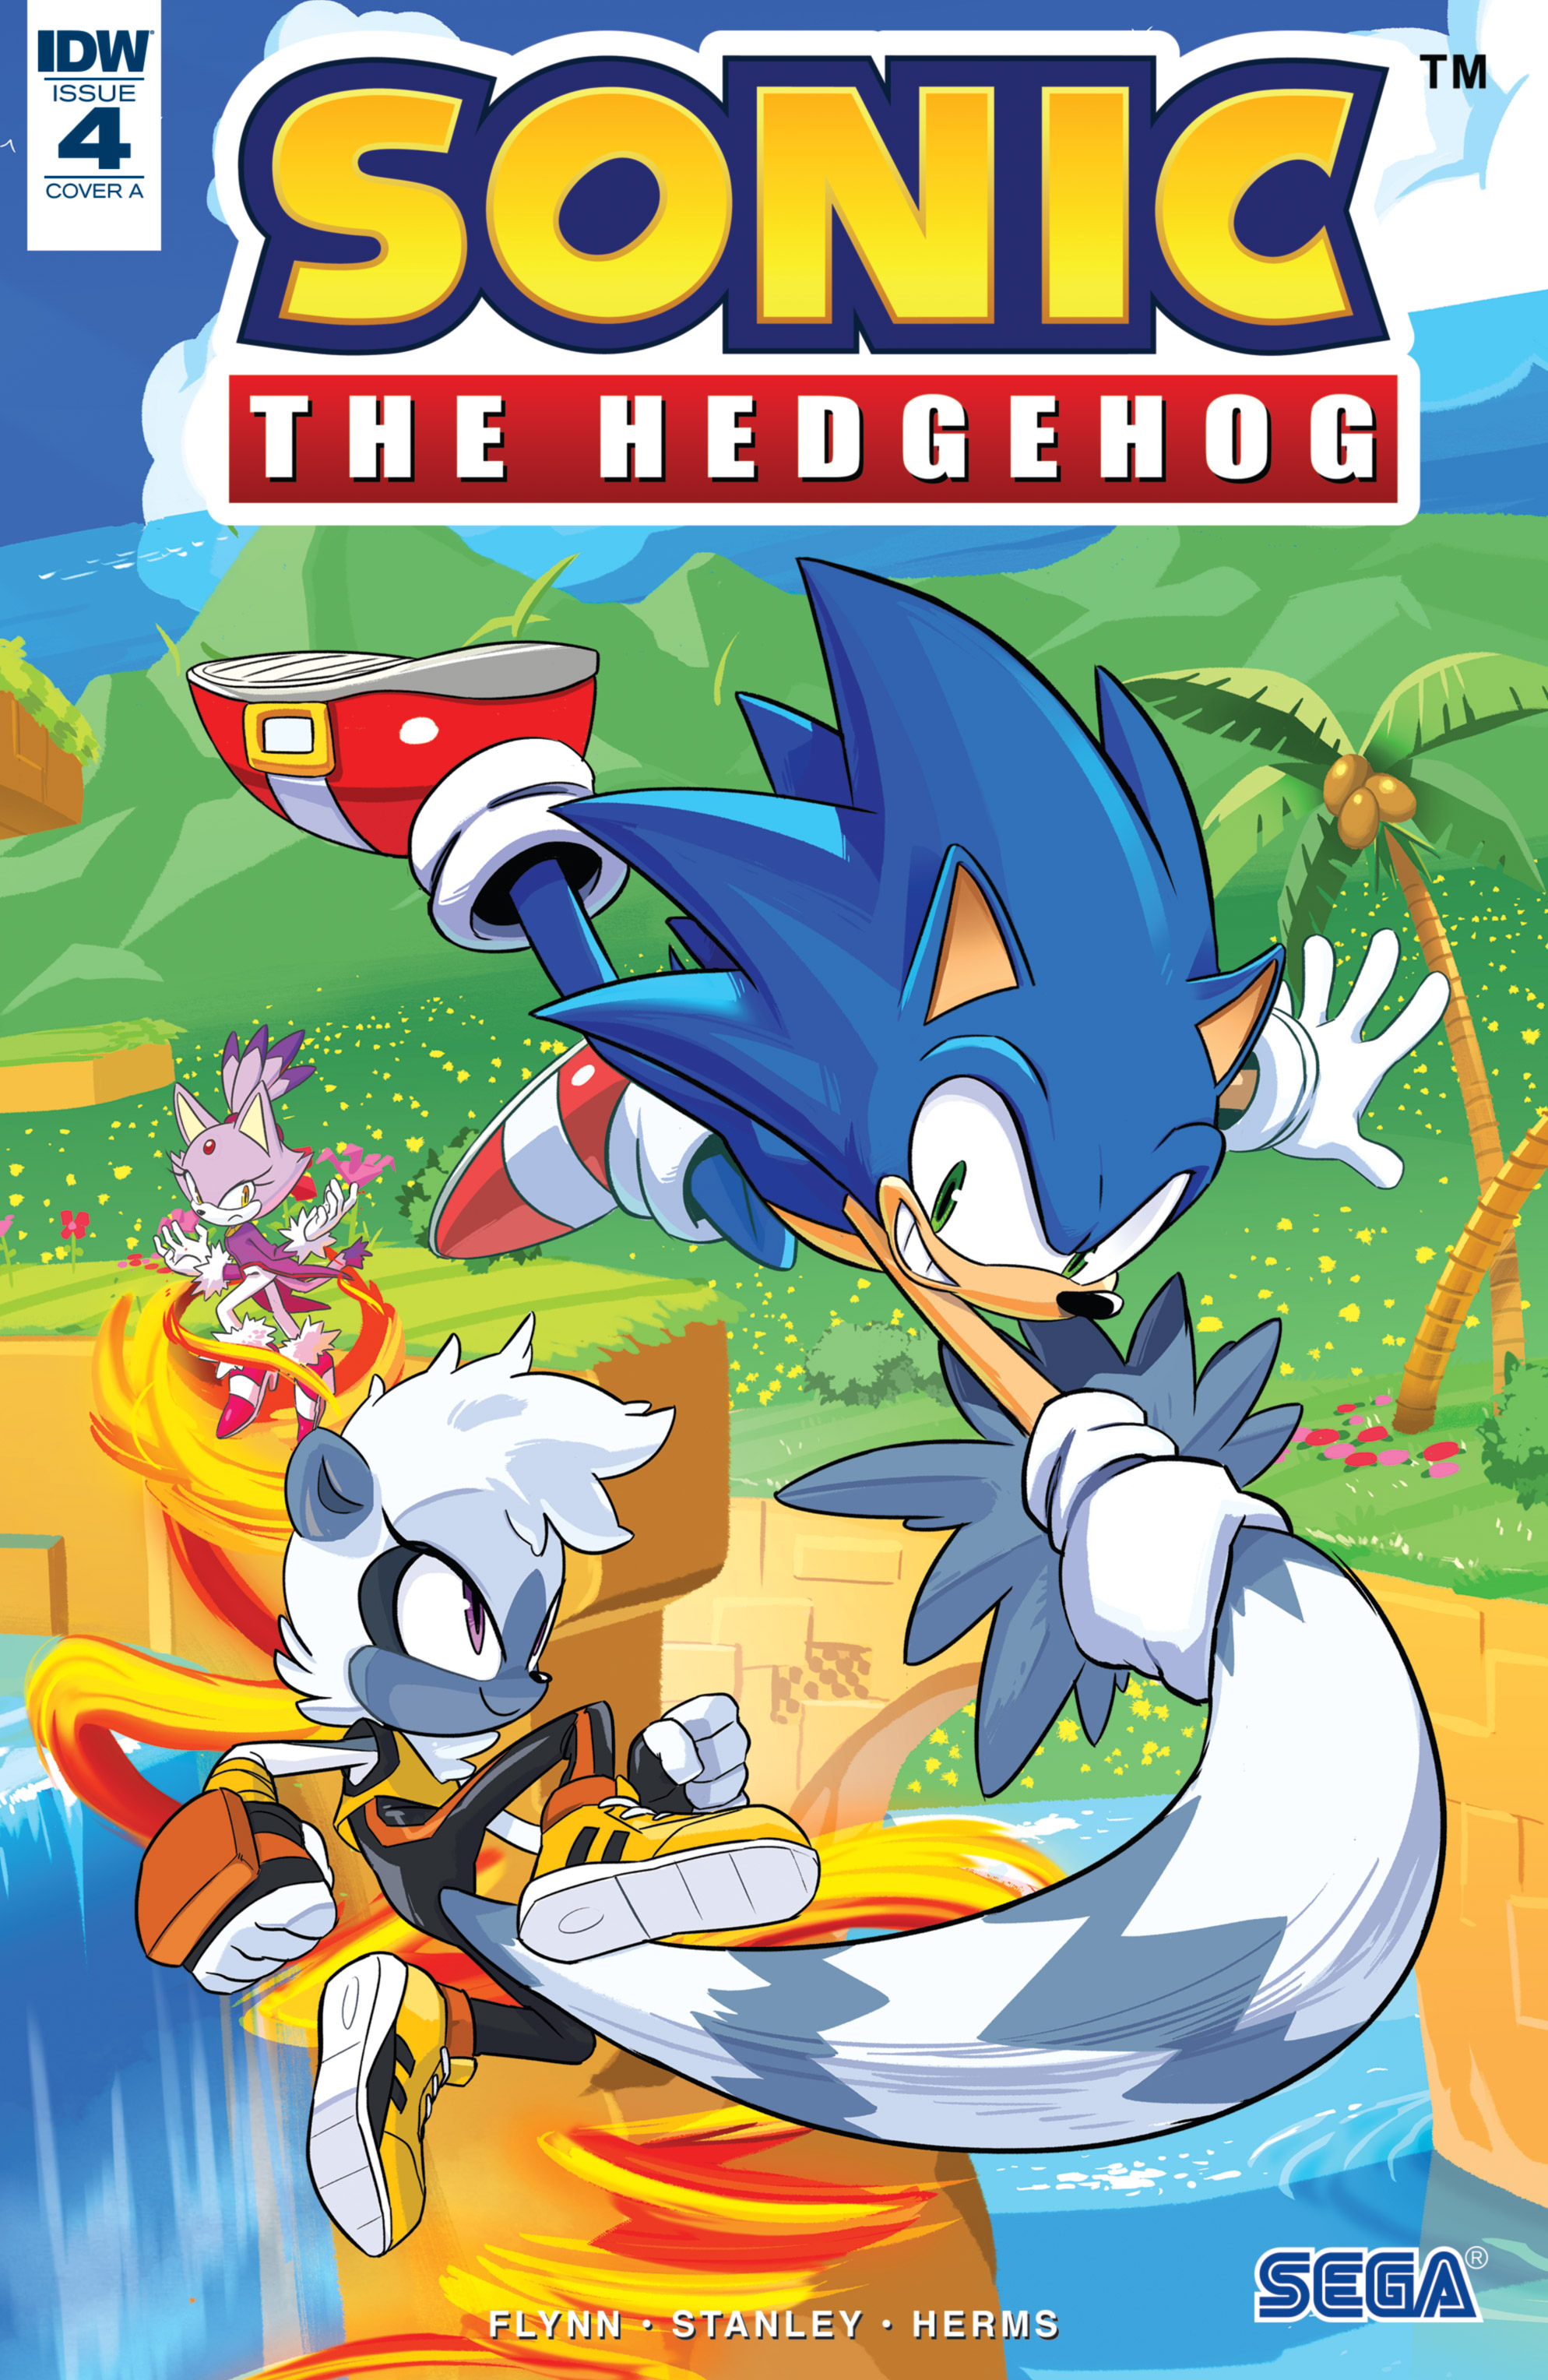 Sonic The Hedgehog IDW (#1-68) - Read Comic Online Sonic The Hedgehog #04